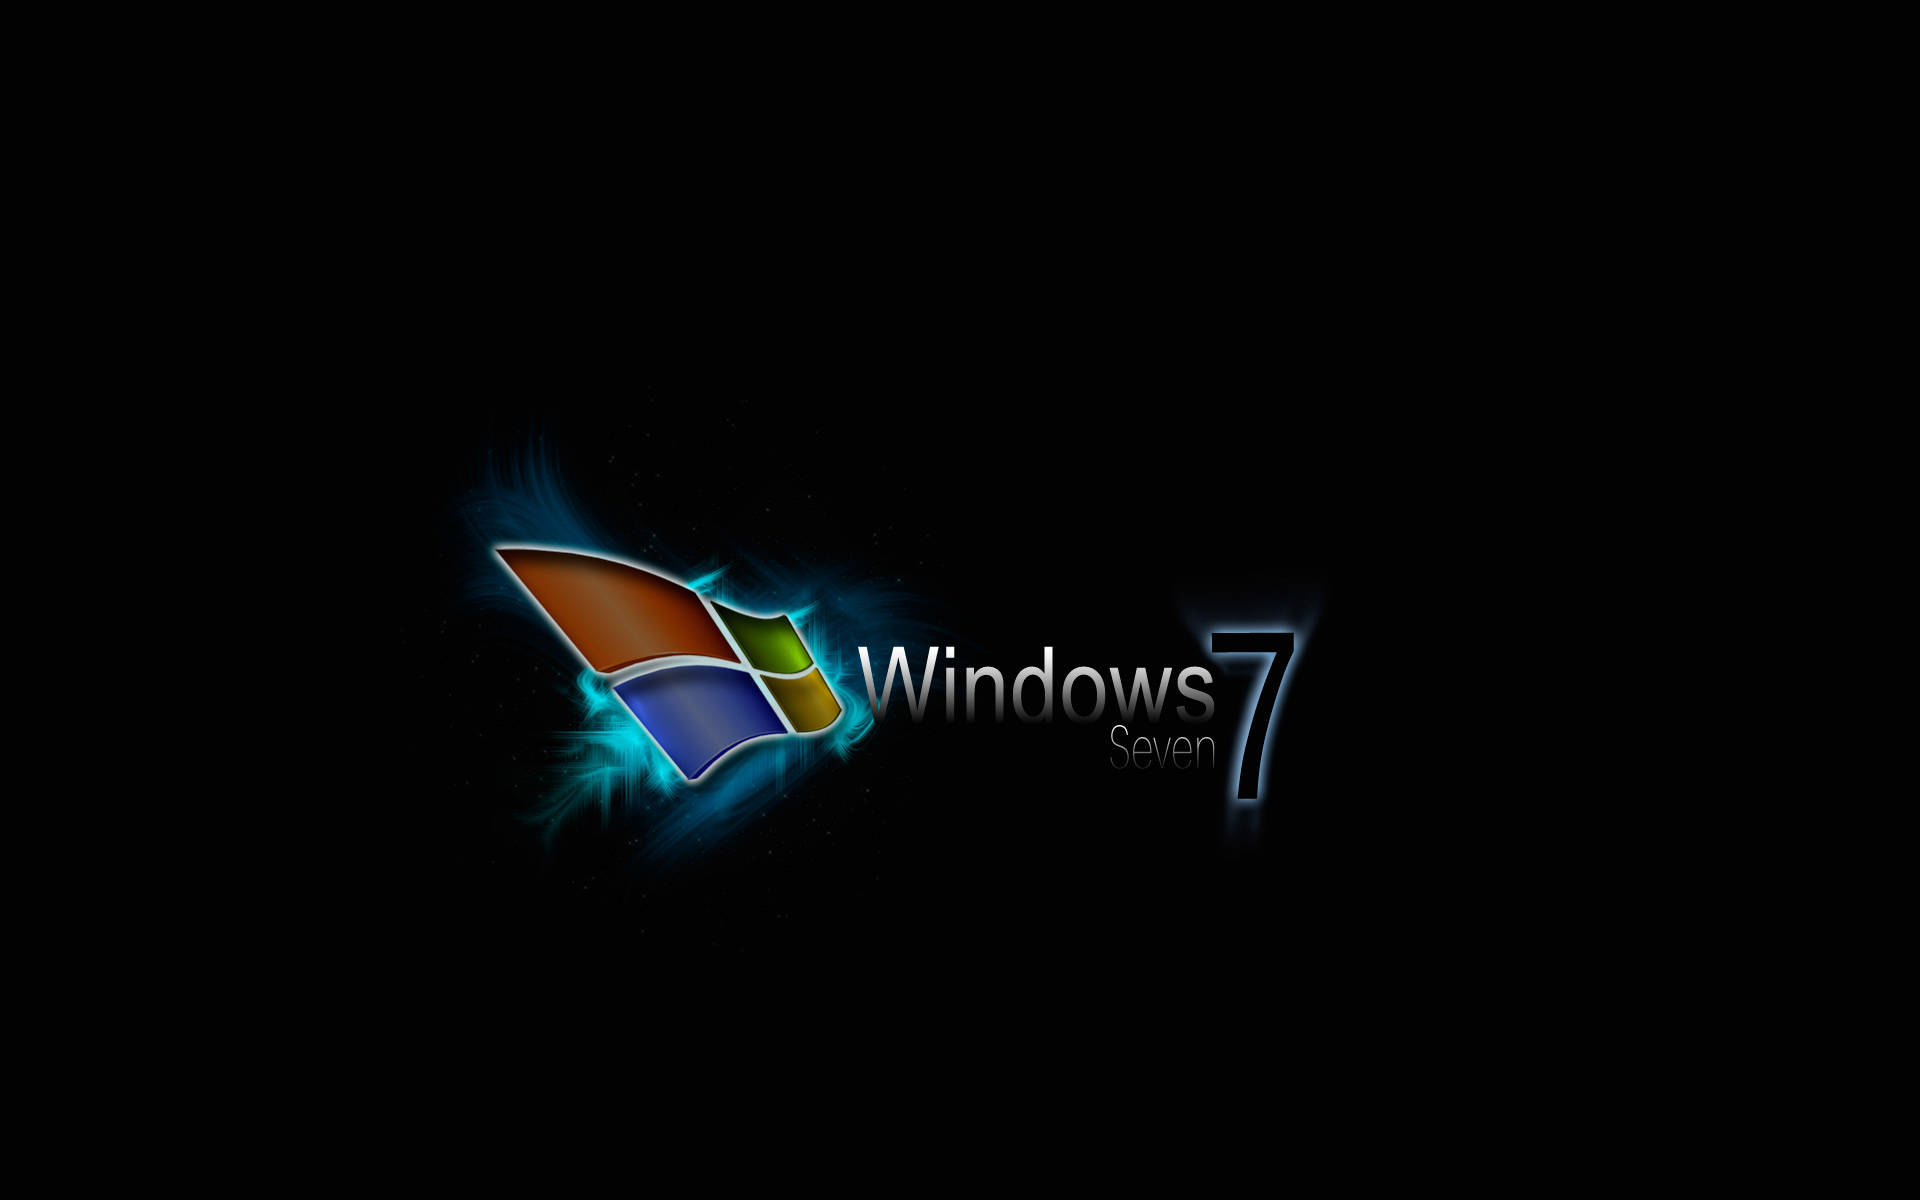 Enjoy the sleek and stylish design of Windows 7 Wallpaper